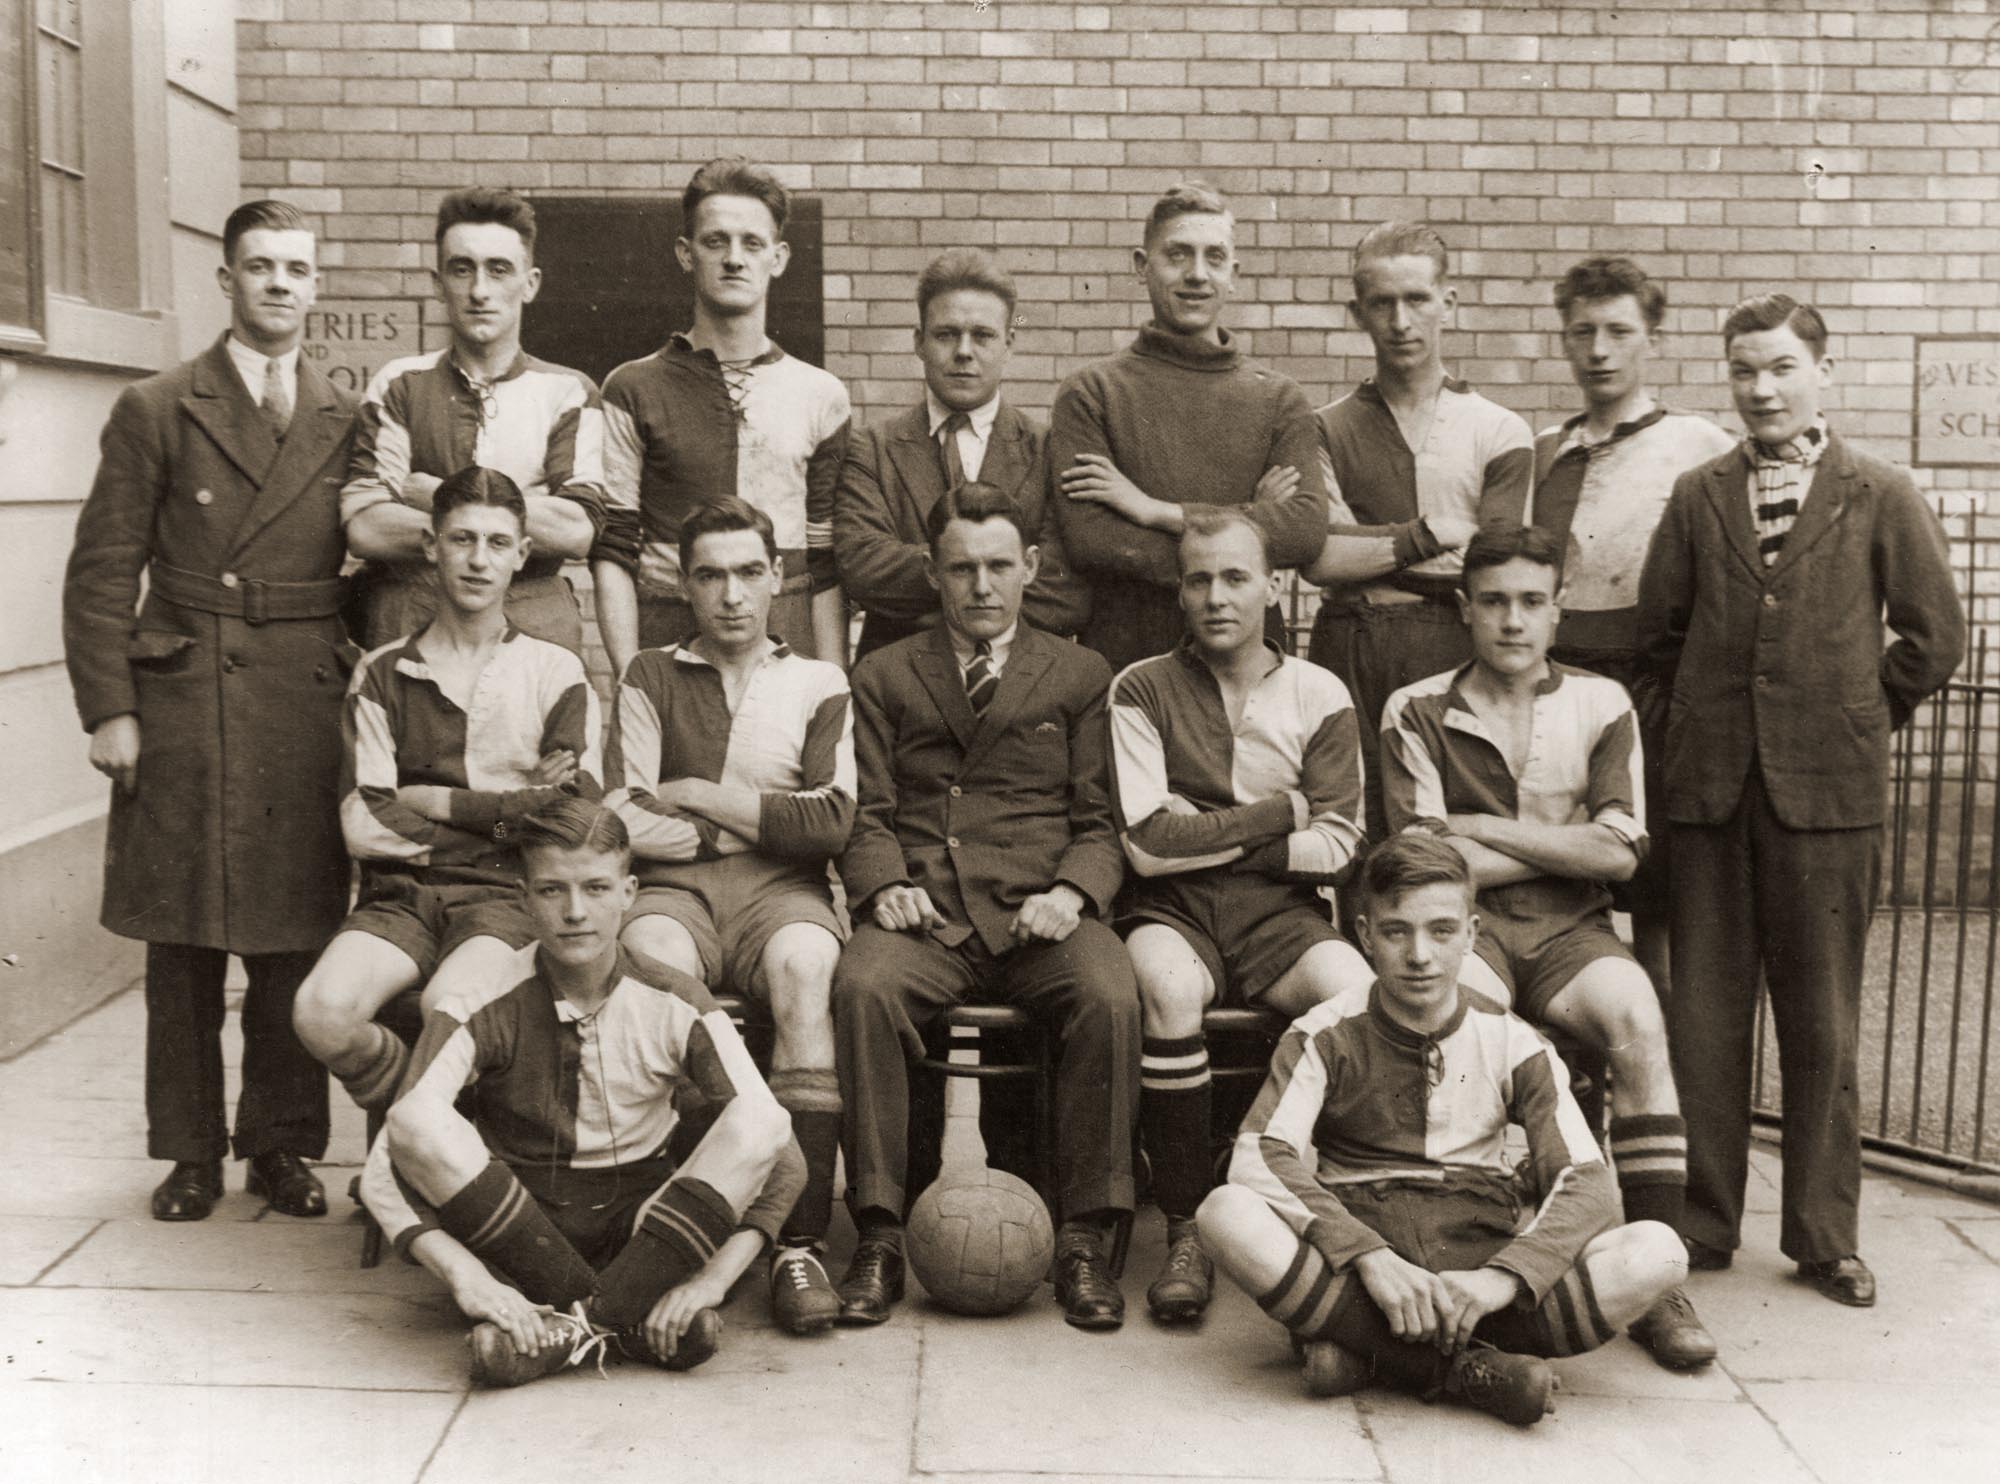 The Charles Street Baptist Church football club, early 20th century - 